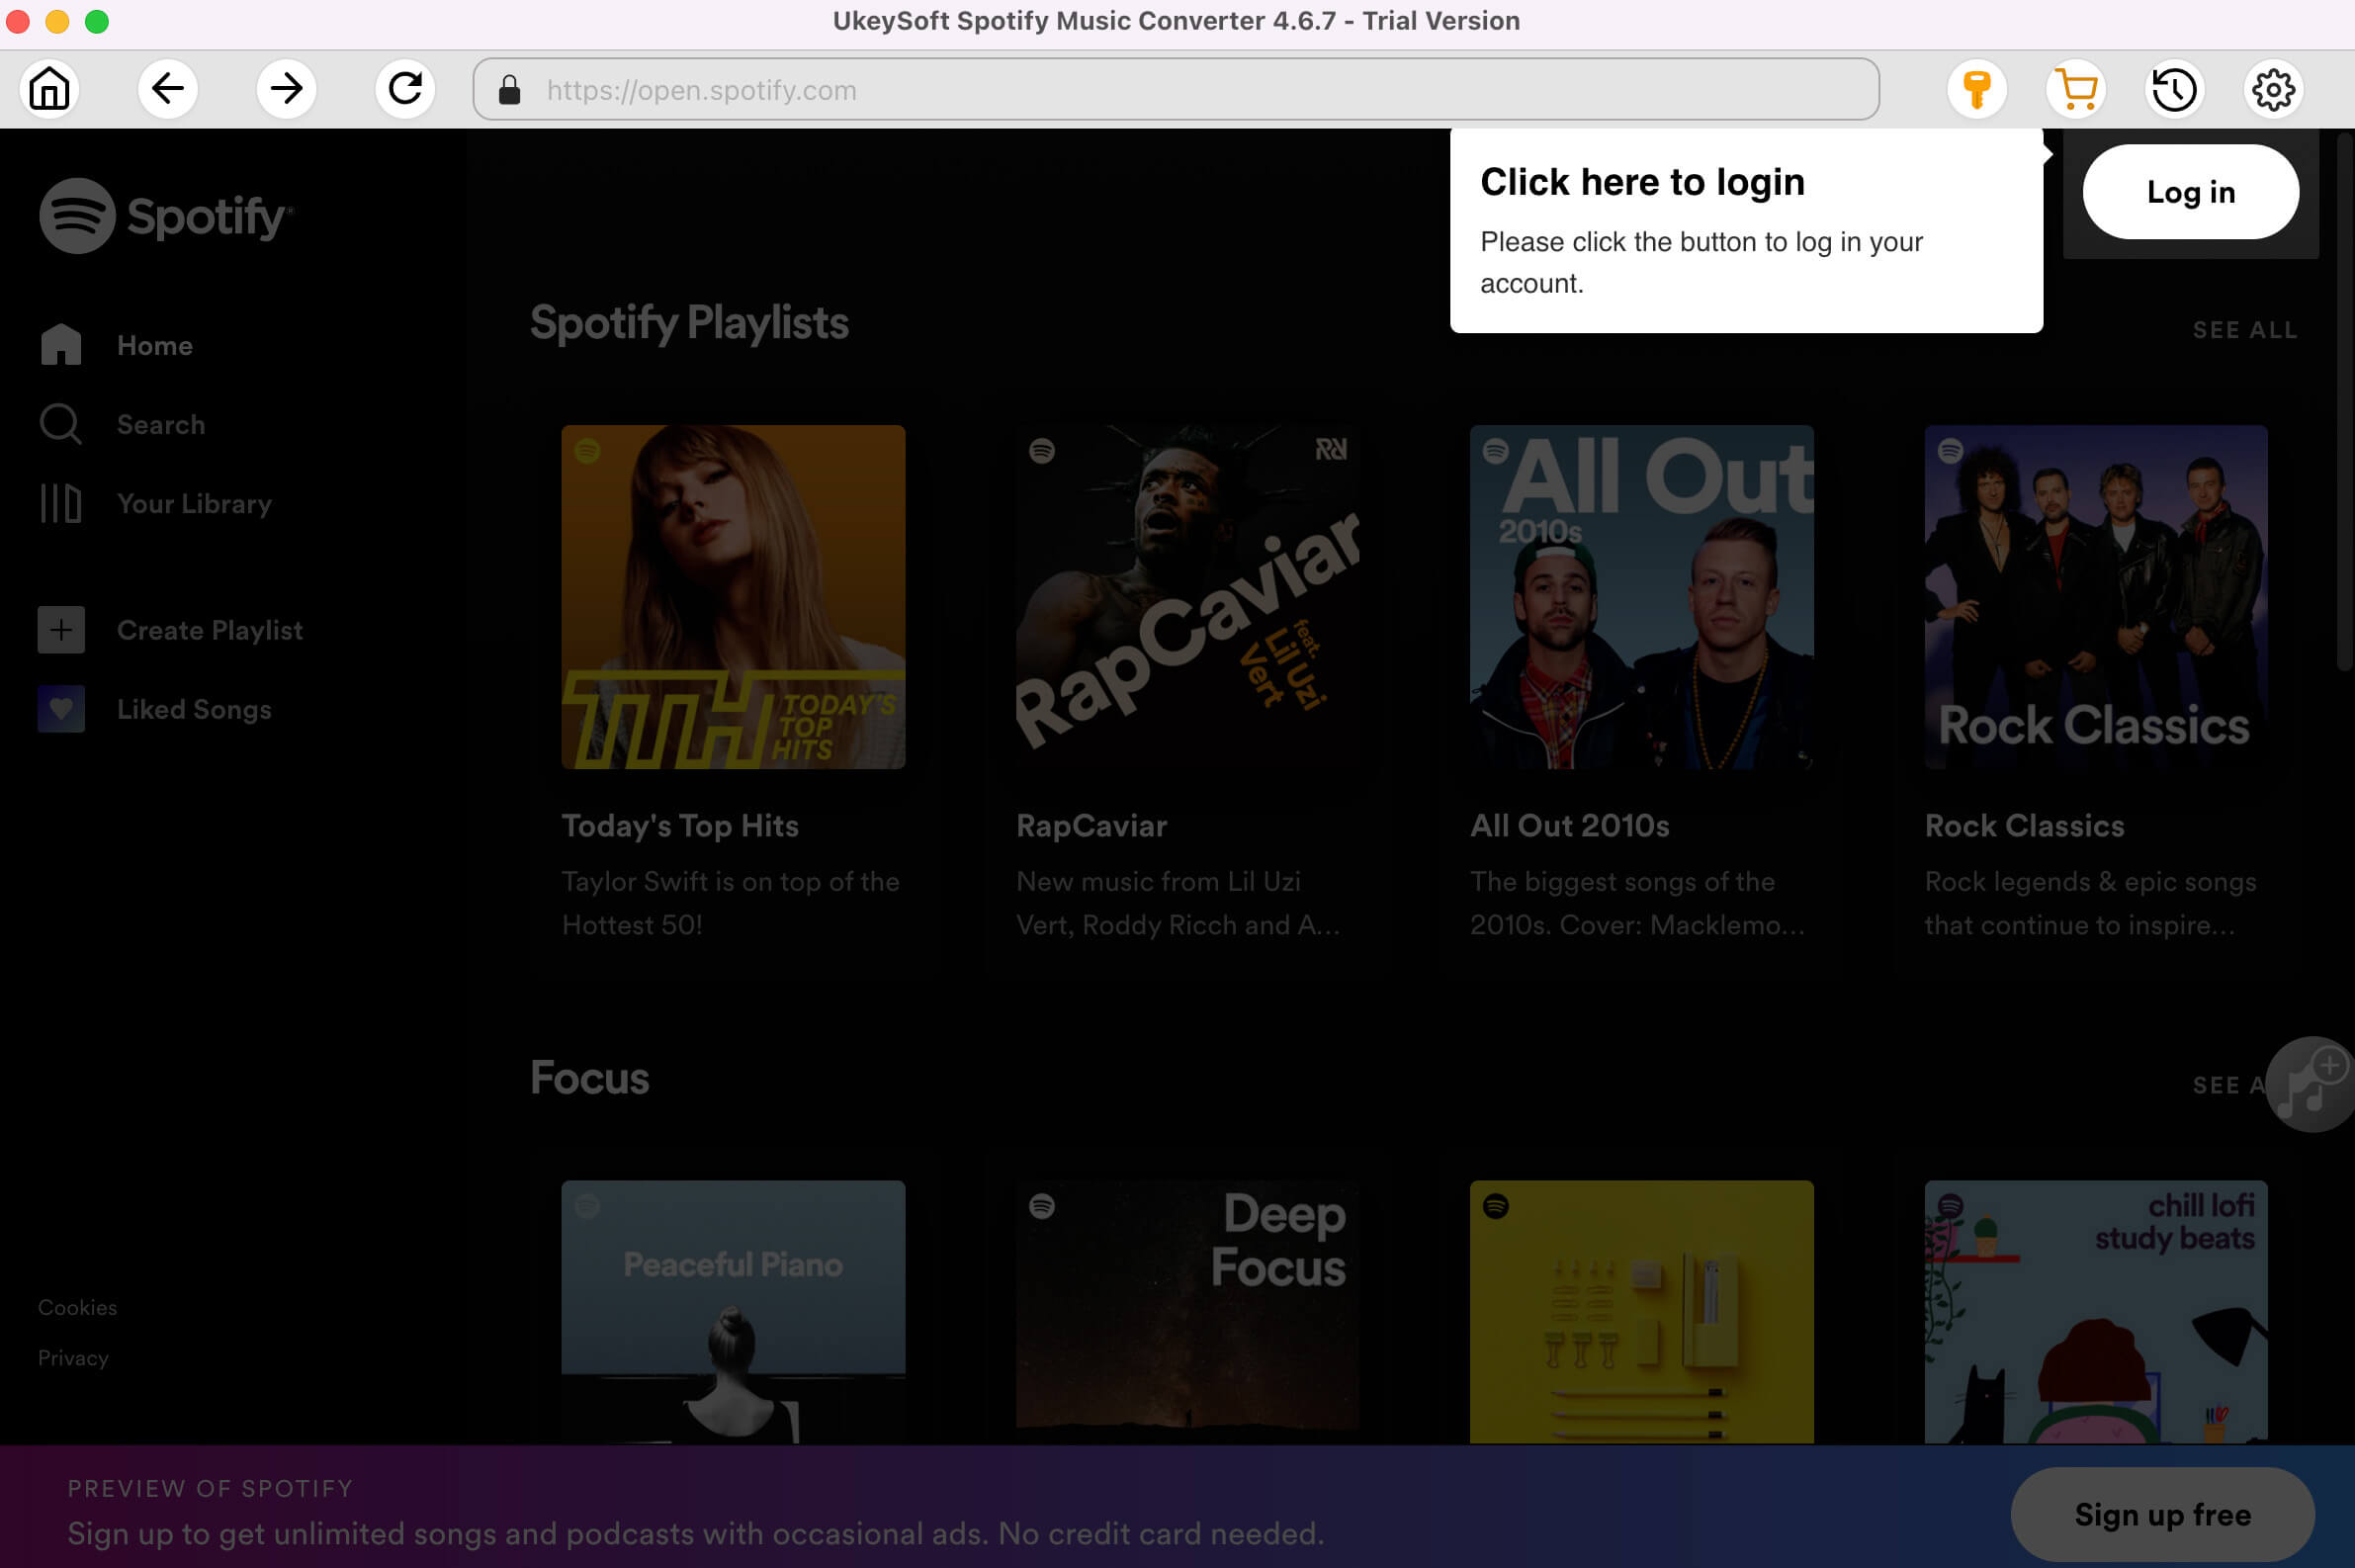 UkeySoft Spotify Music Converer Interface